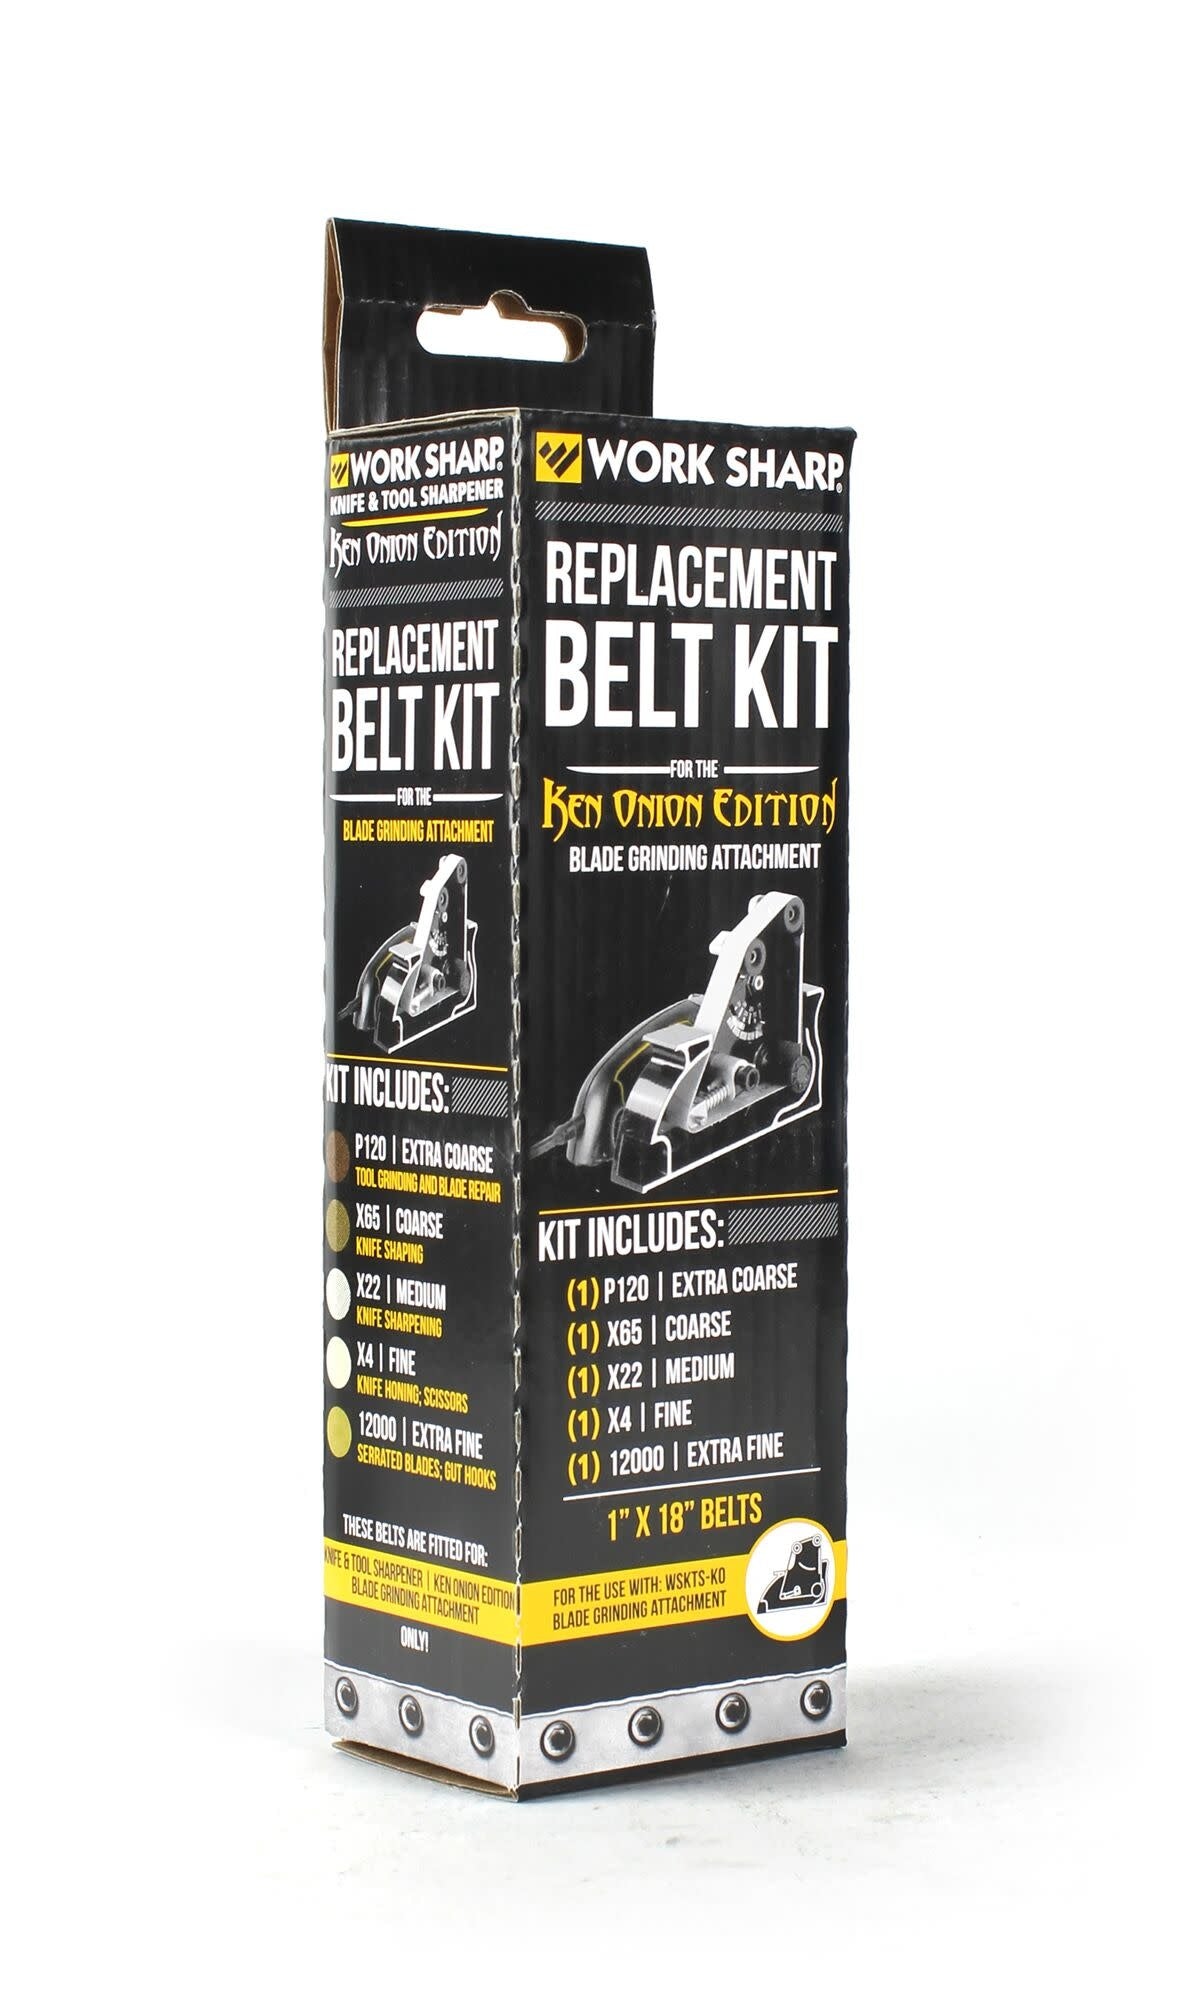 Work Safe Sharpeners Blade Grinding Attachment Belt kit Ken Onion Edition